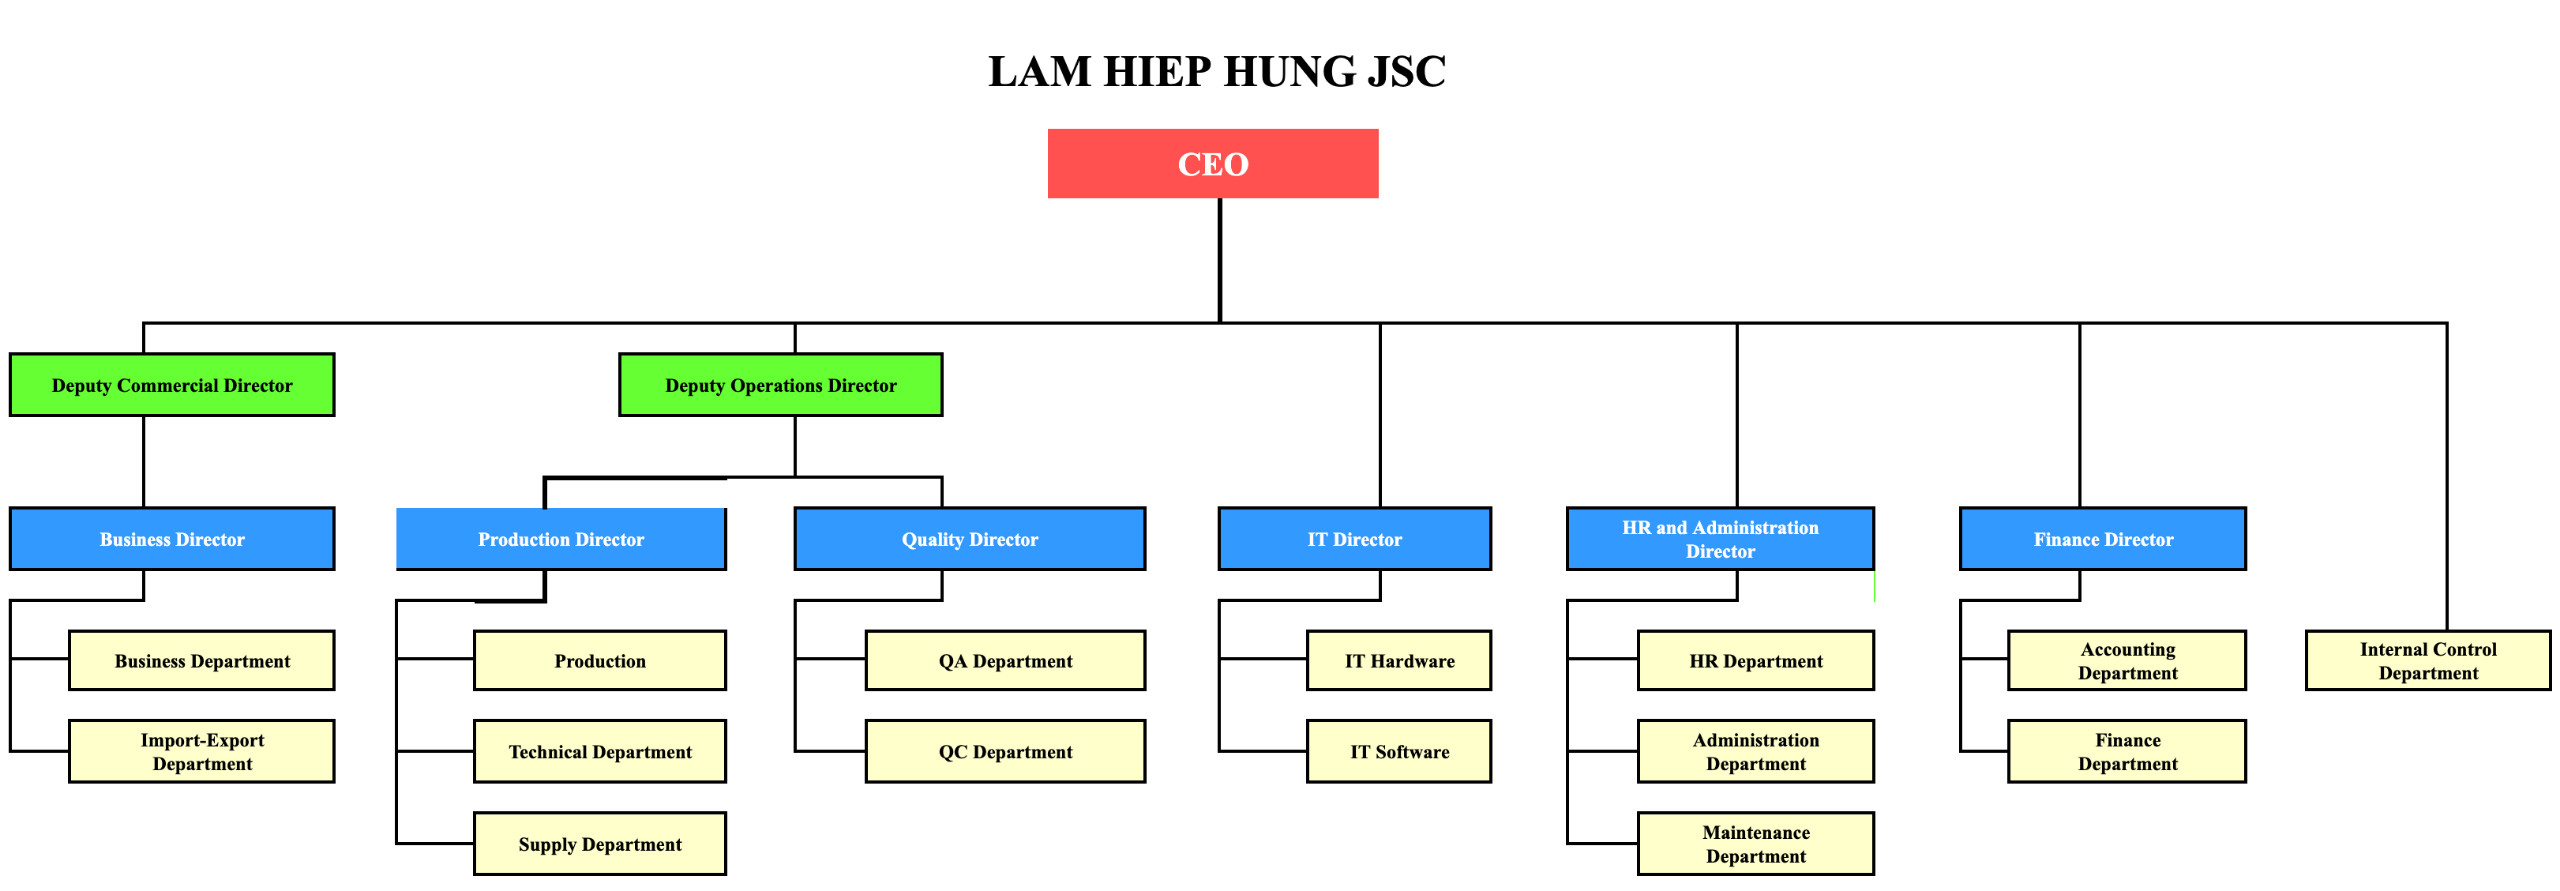 Organizational Structure - Lam Hiep Hung JSC